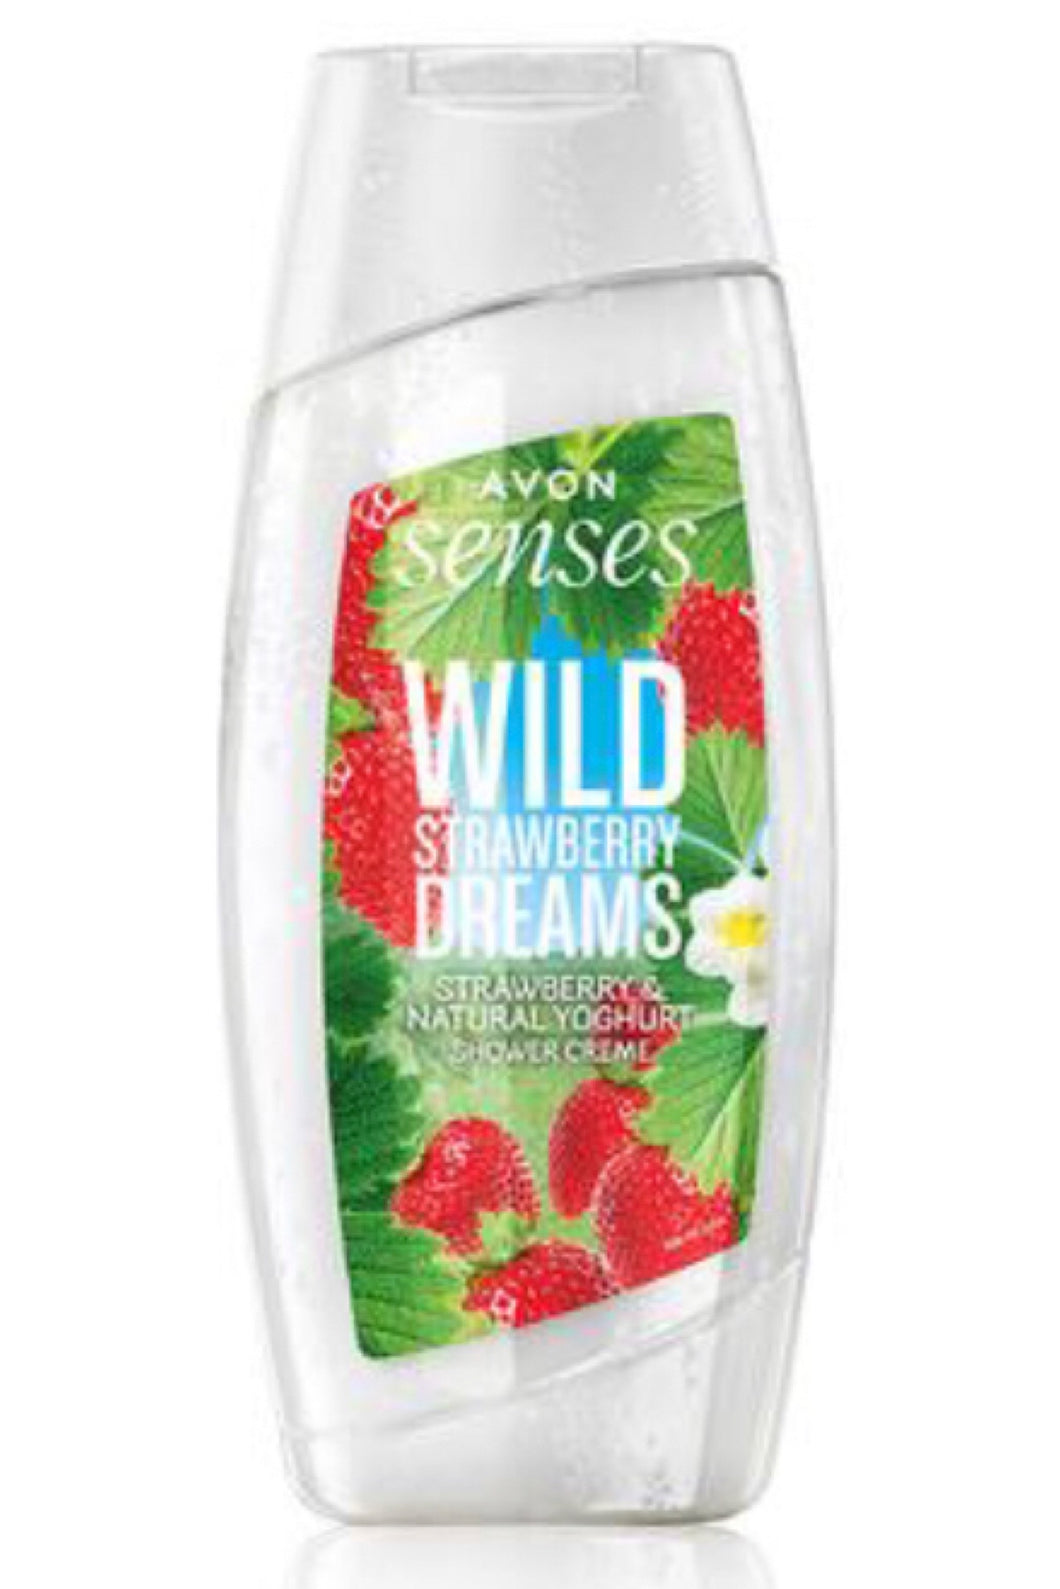 Avon Senses Wild Strawberry Dreams Strawberry & Natural Yoghurt Shower Crème 500ml